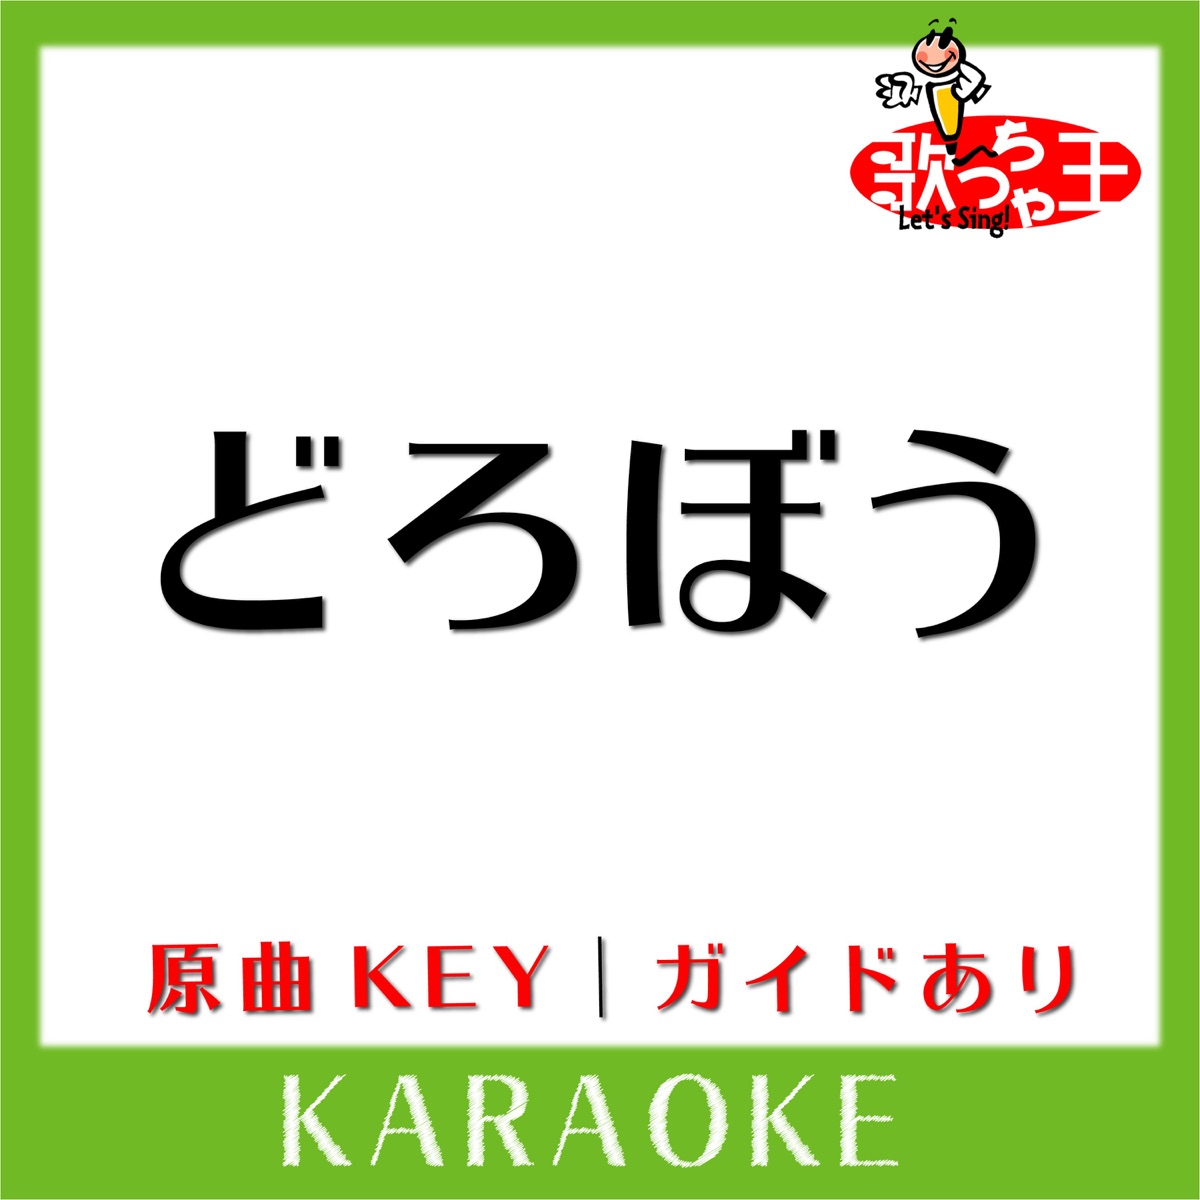 DOUTAN KYOHI KARAOKE Original by HoneyWorks feat. KAPI - Single - Album by  Uta-Cha-Oh - Apple Music